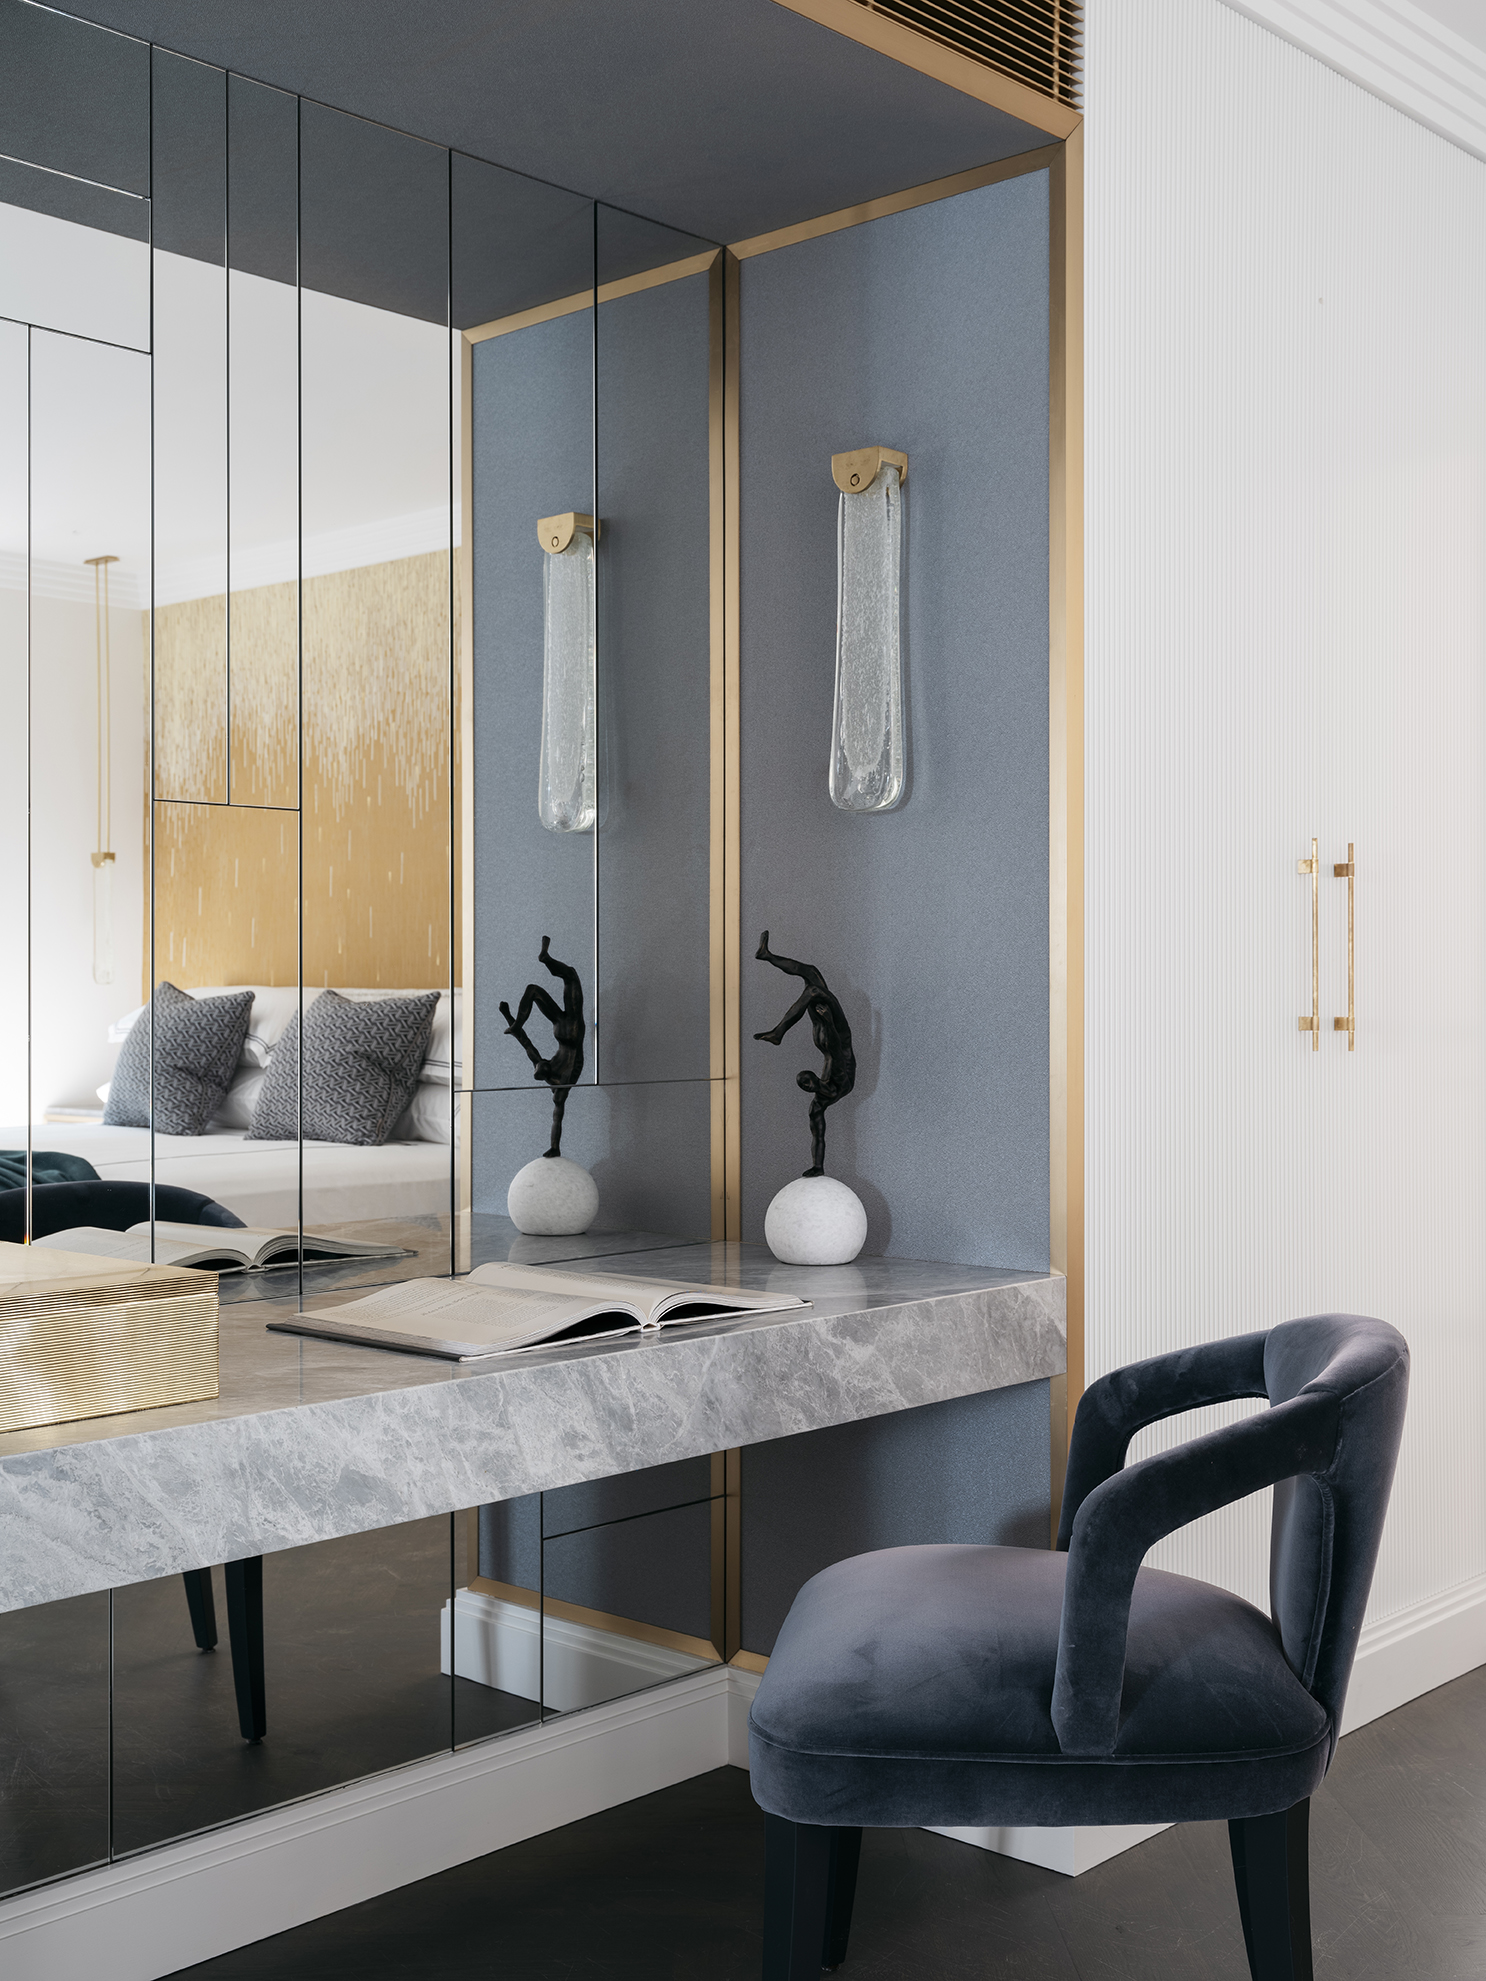 Bedroom interior renovation with Articolo lighting and Munna velvet chair, by Sydney interior designer, Brendan Wong Design